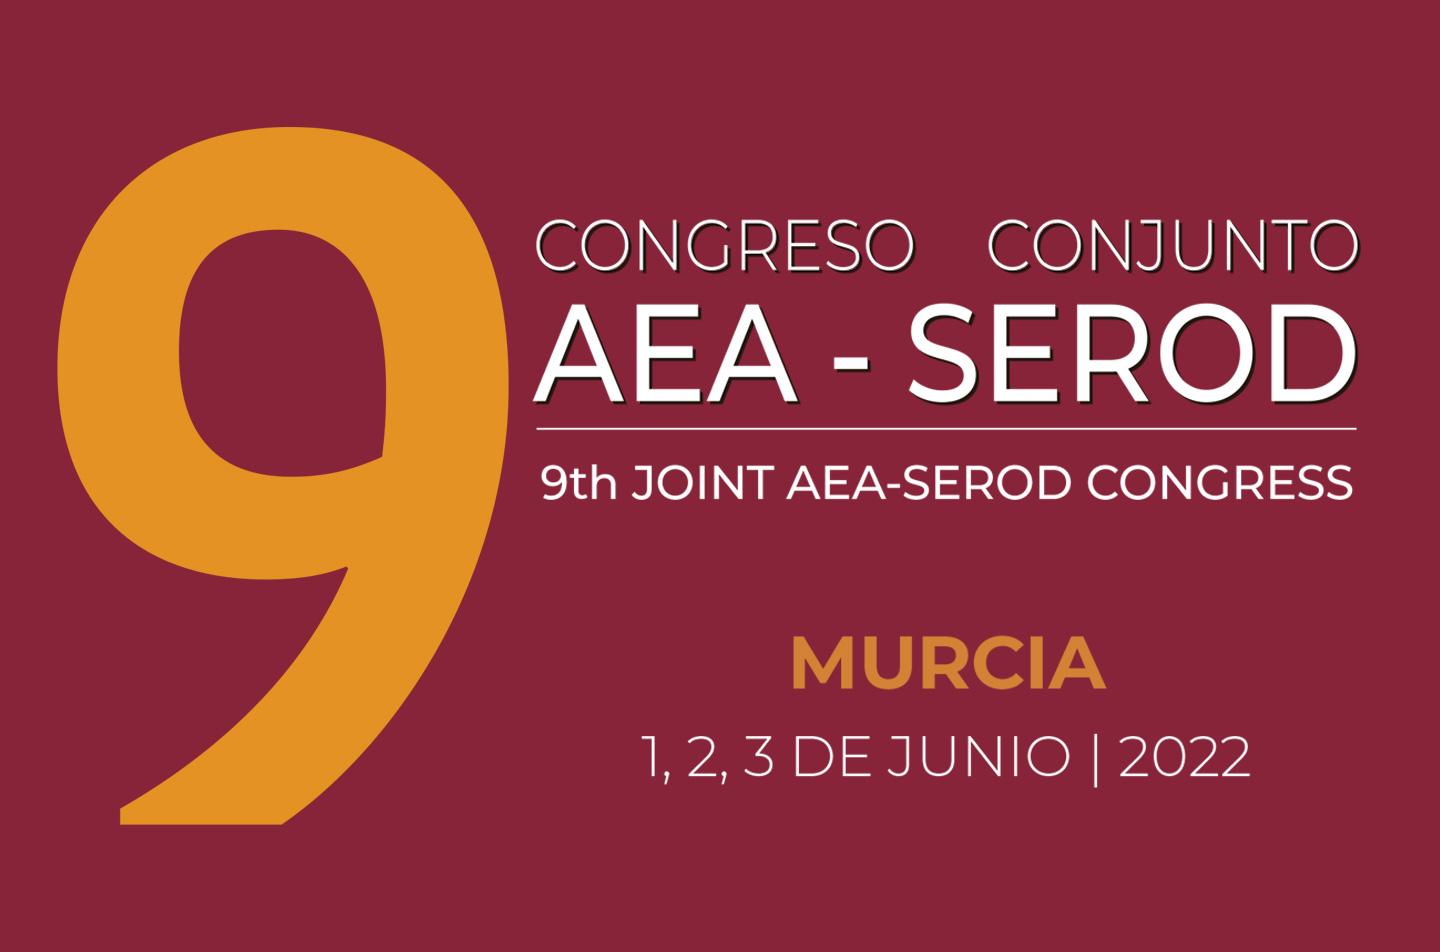 Congreso AEA-SEROD 2022